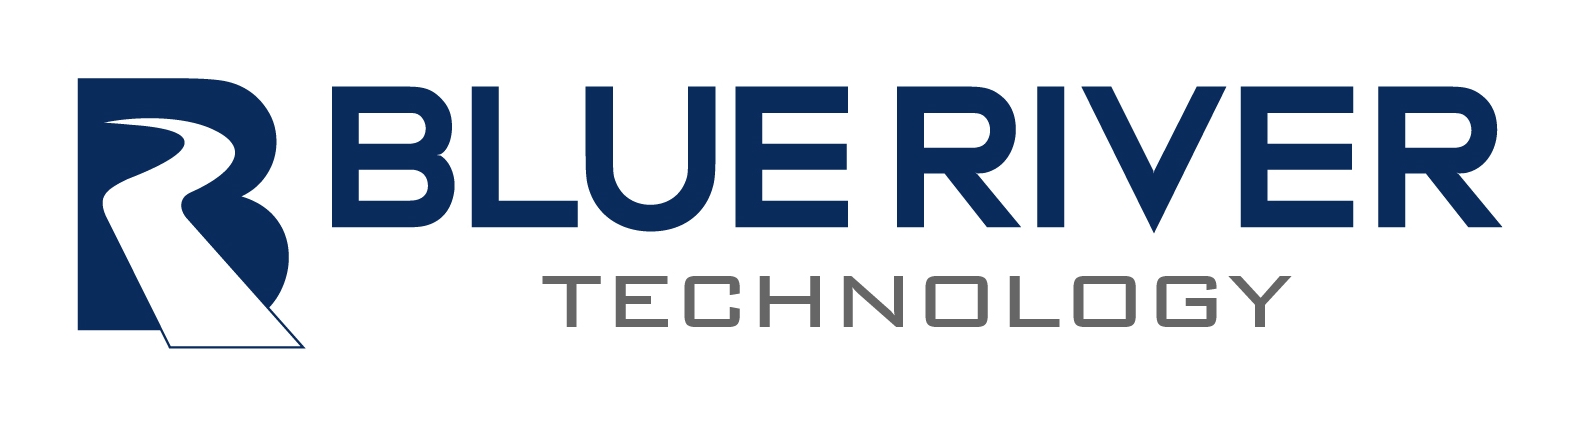 Blue River Technology | DeviceDaily.com